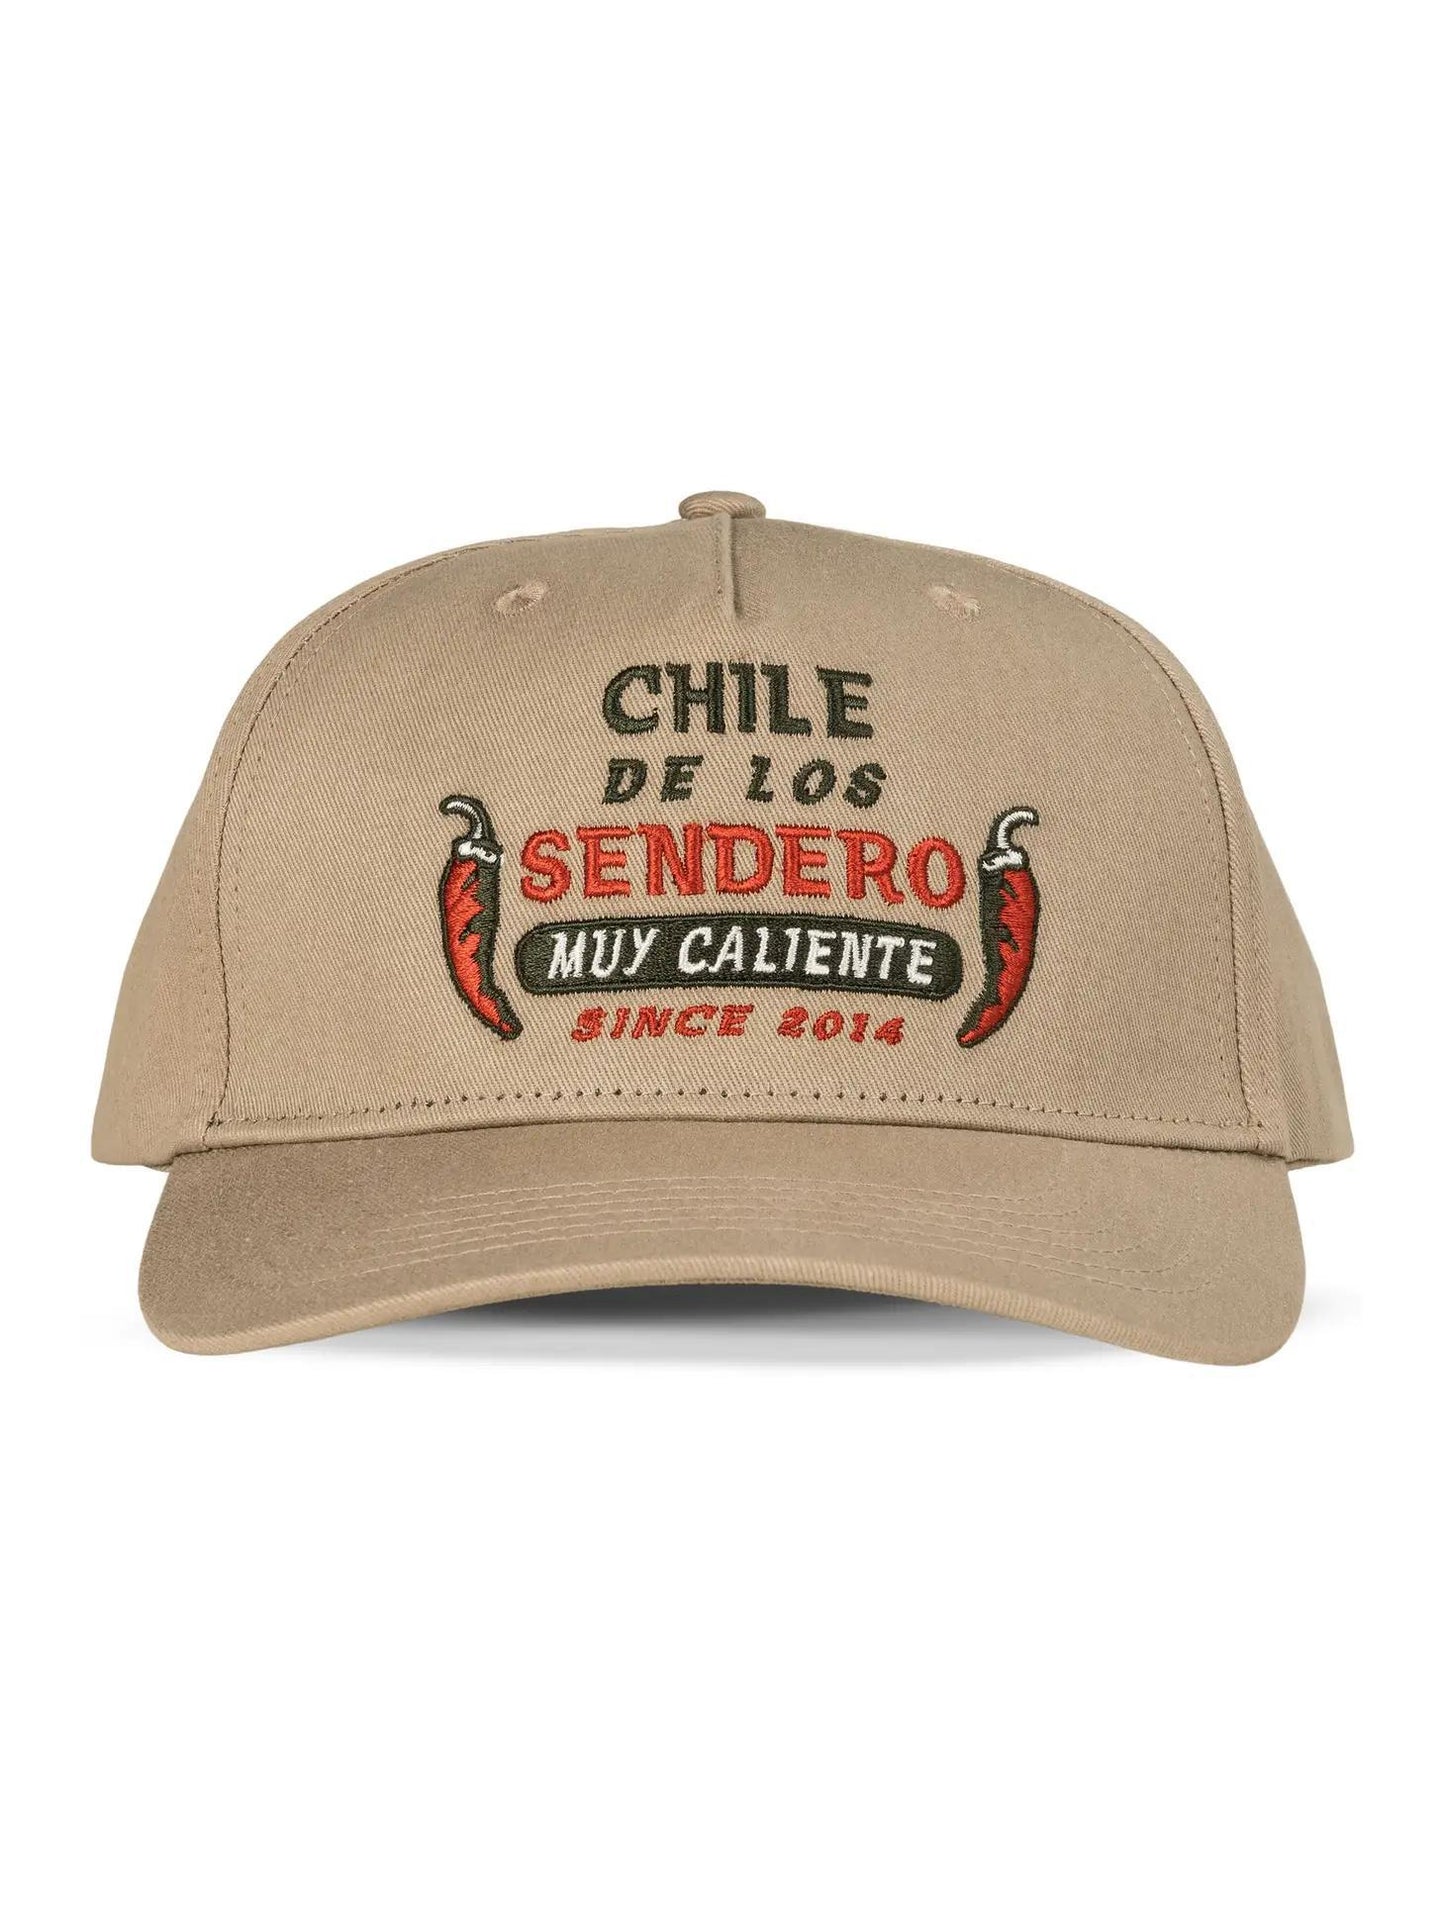 Chile De Sendero Hat